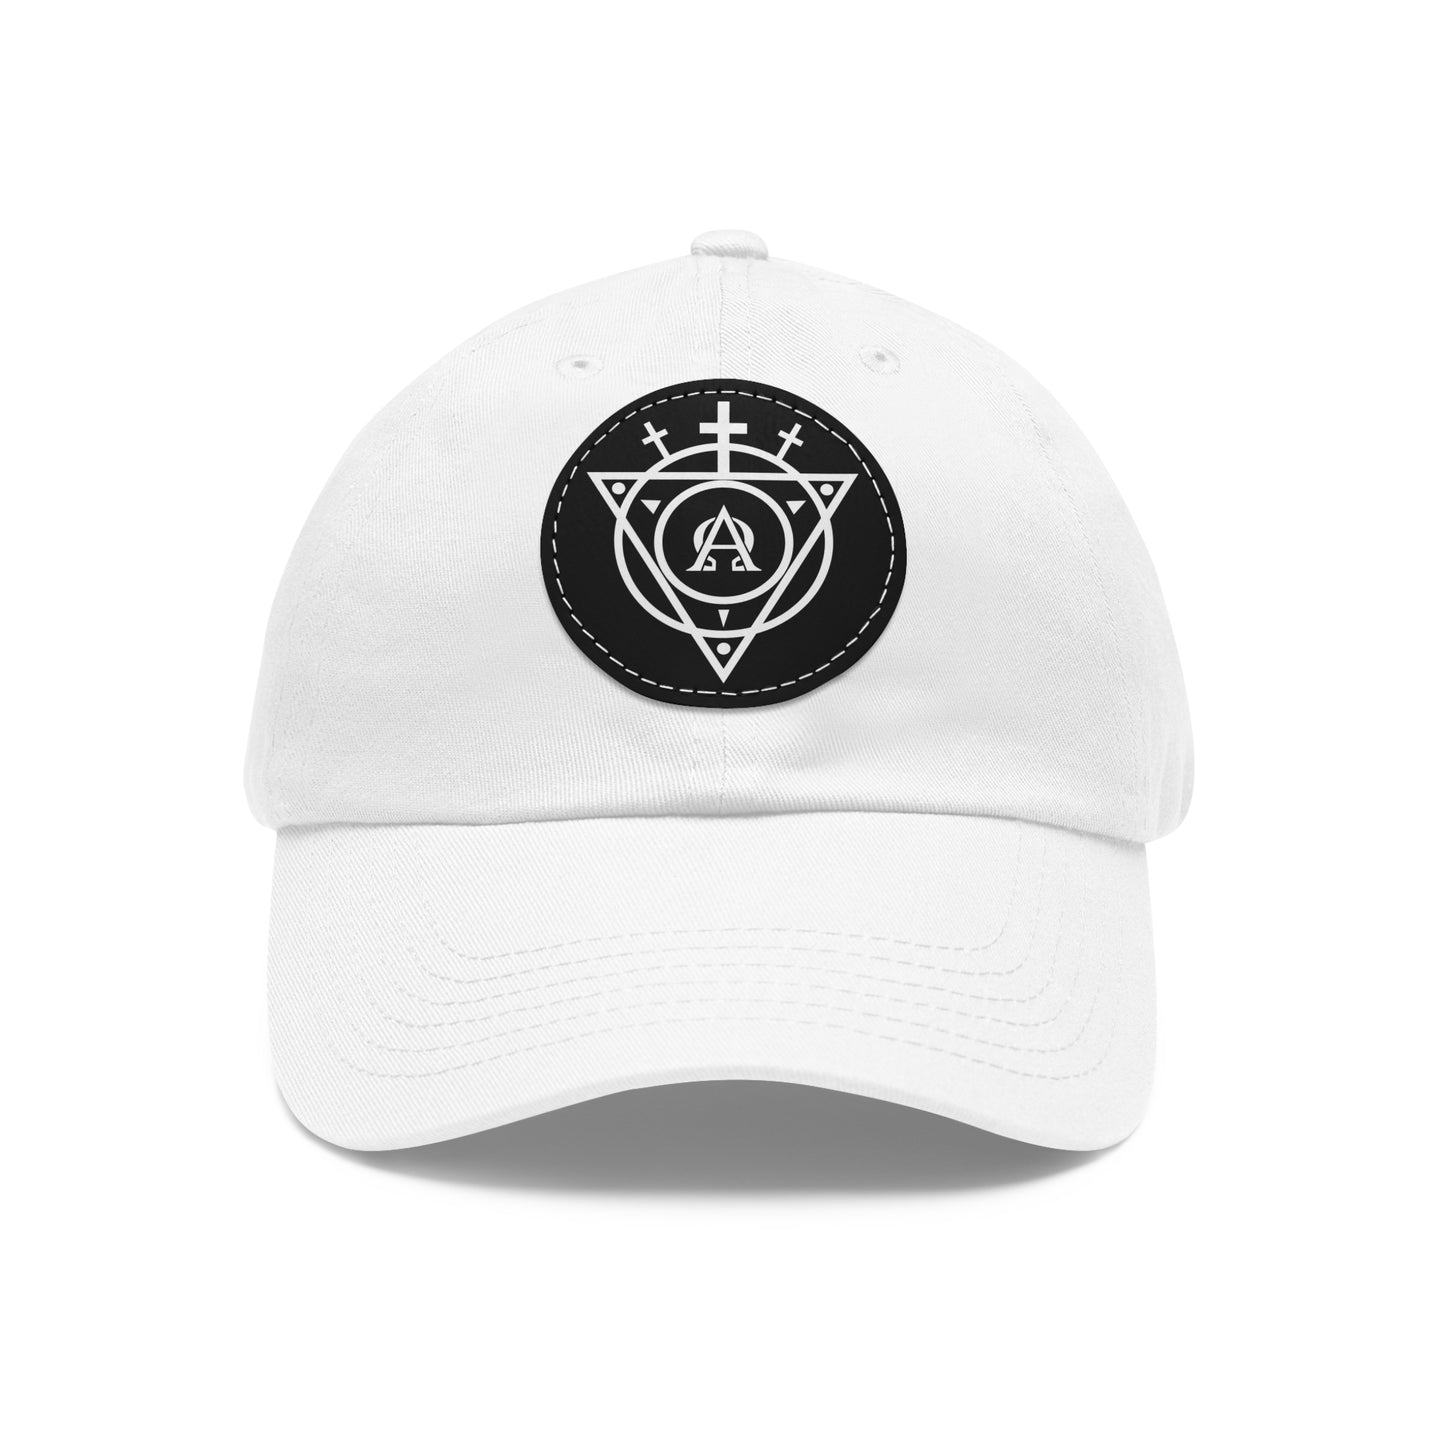 Golgotha Dad Hat with Leather emblem.